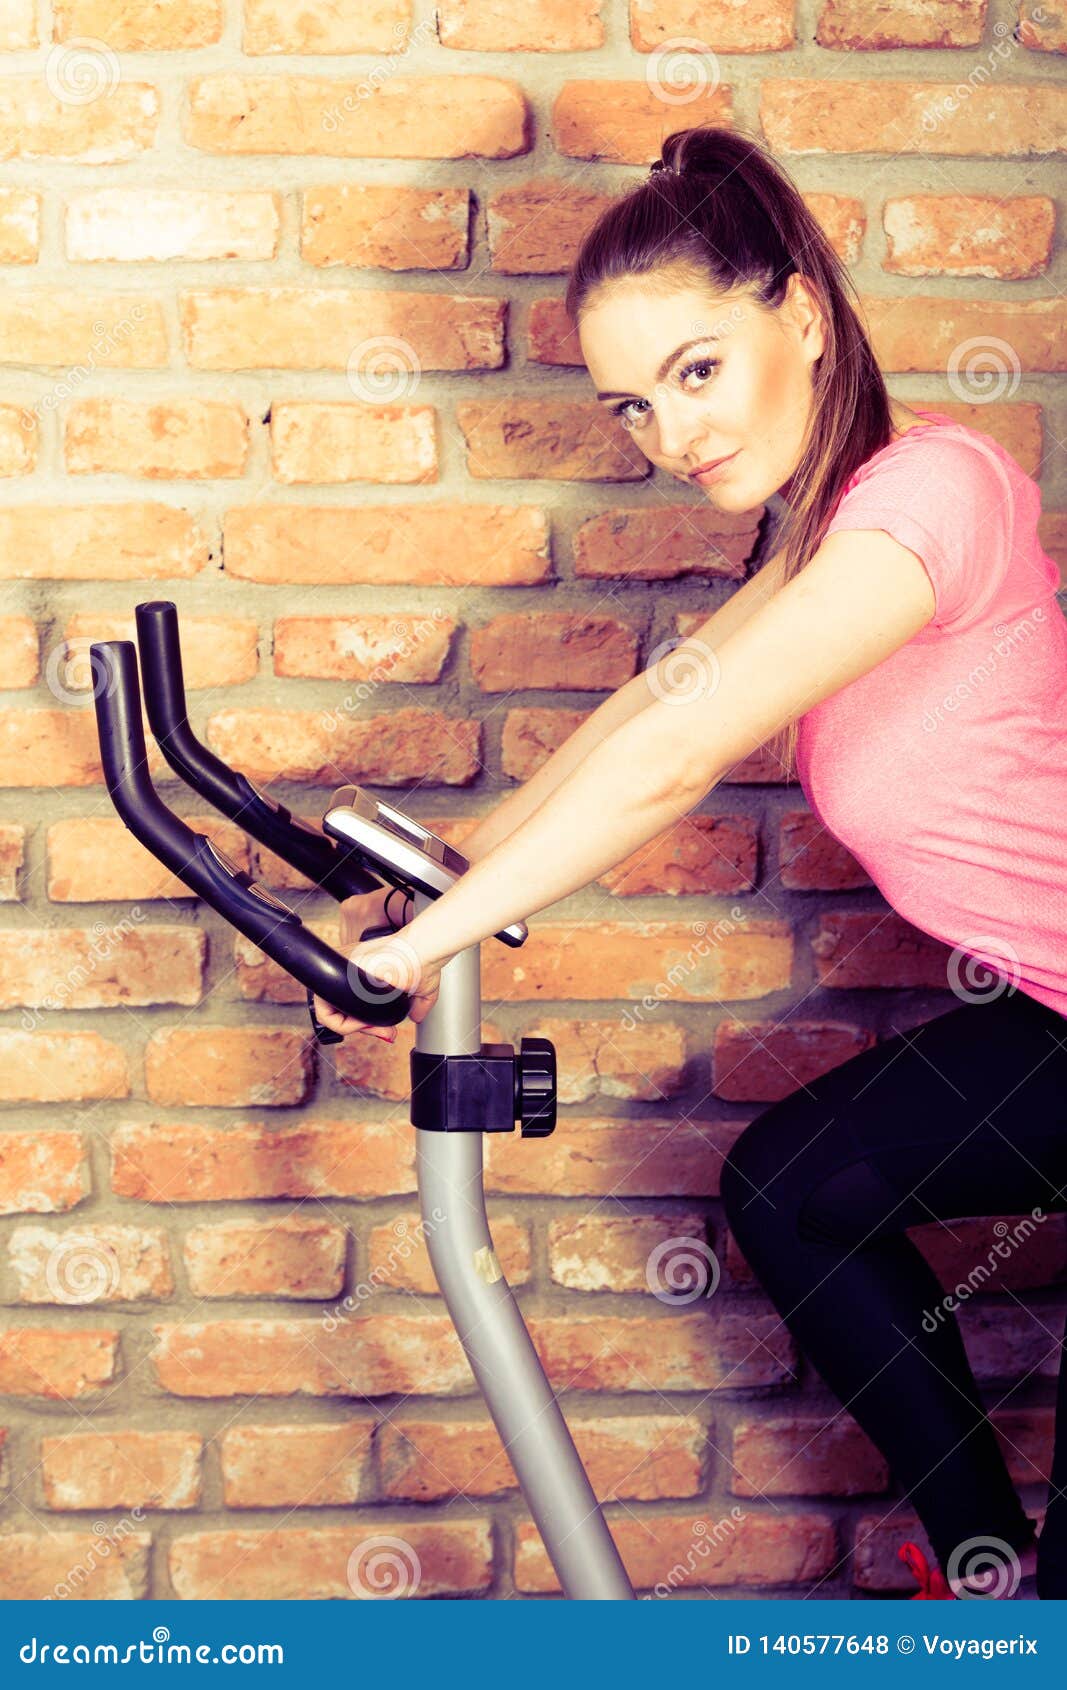 Women on exercise bikes. stock photo. Image of indoors 